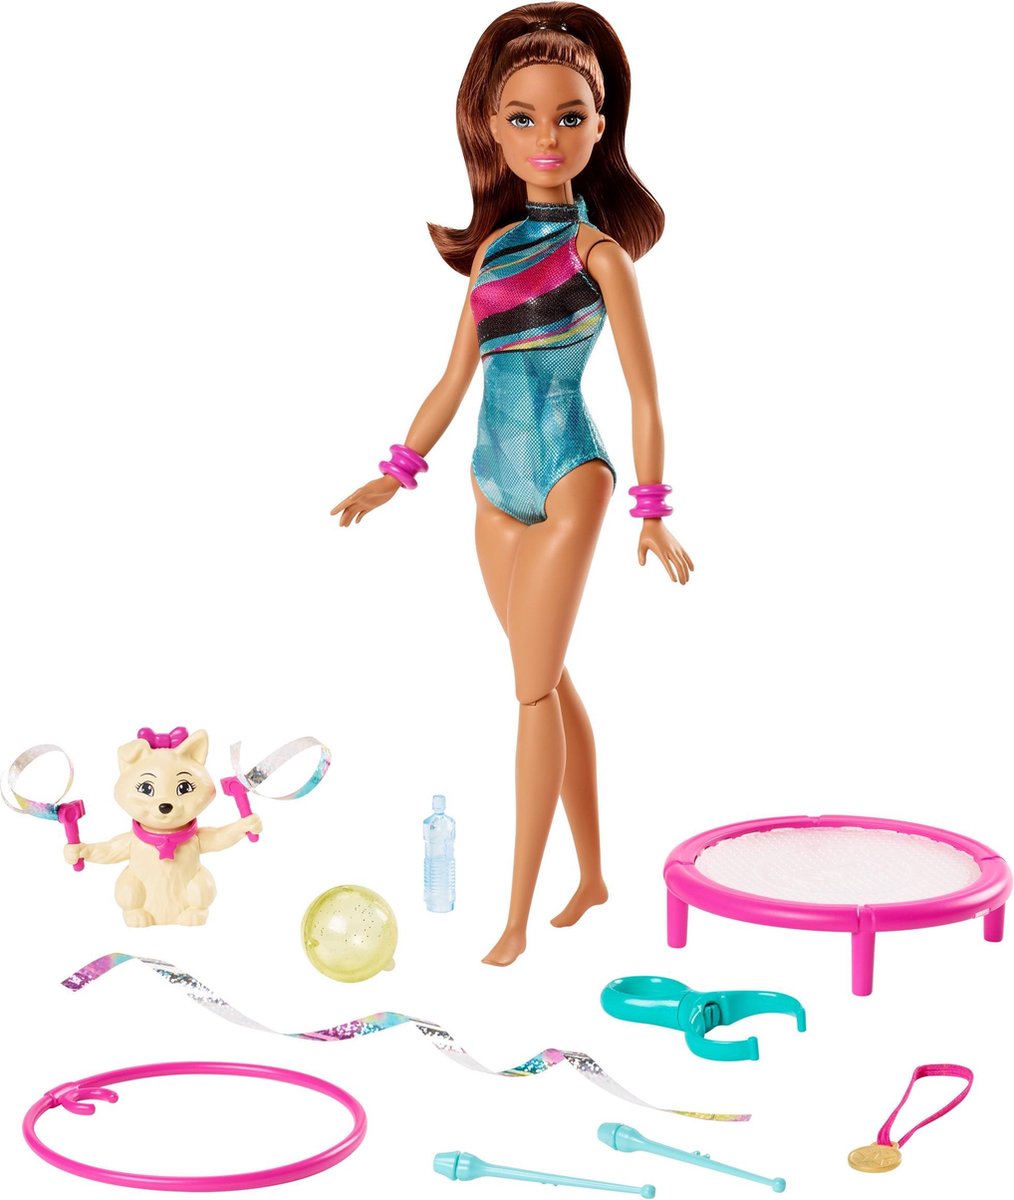 Barbie tienerpop Spin &apos;n Twirl Gymnast 29 cm - Blauw